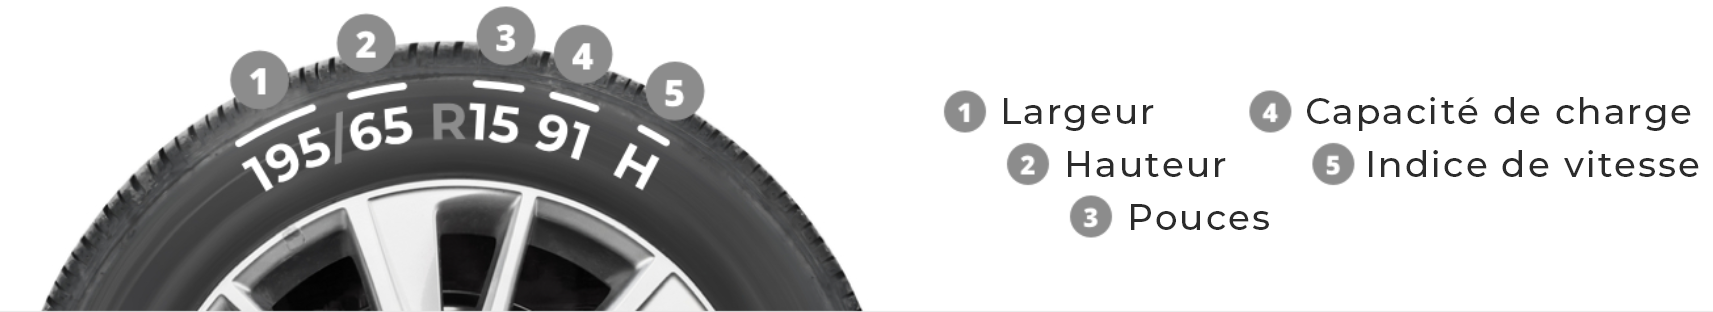 Taille de pneus